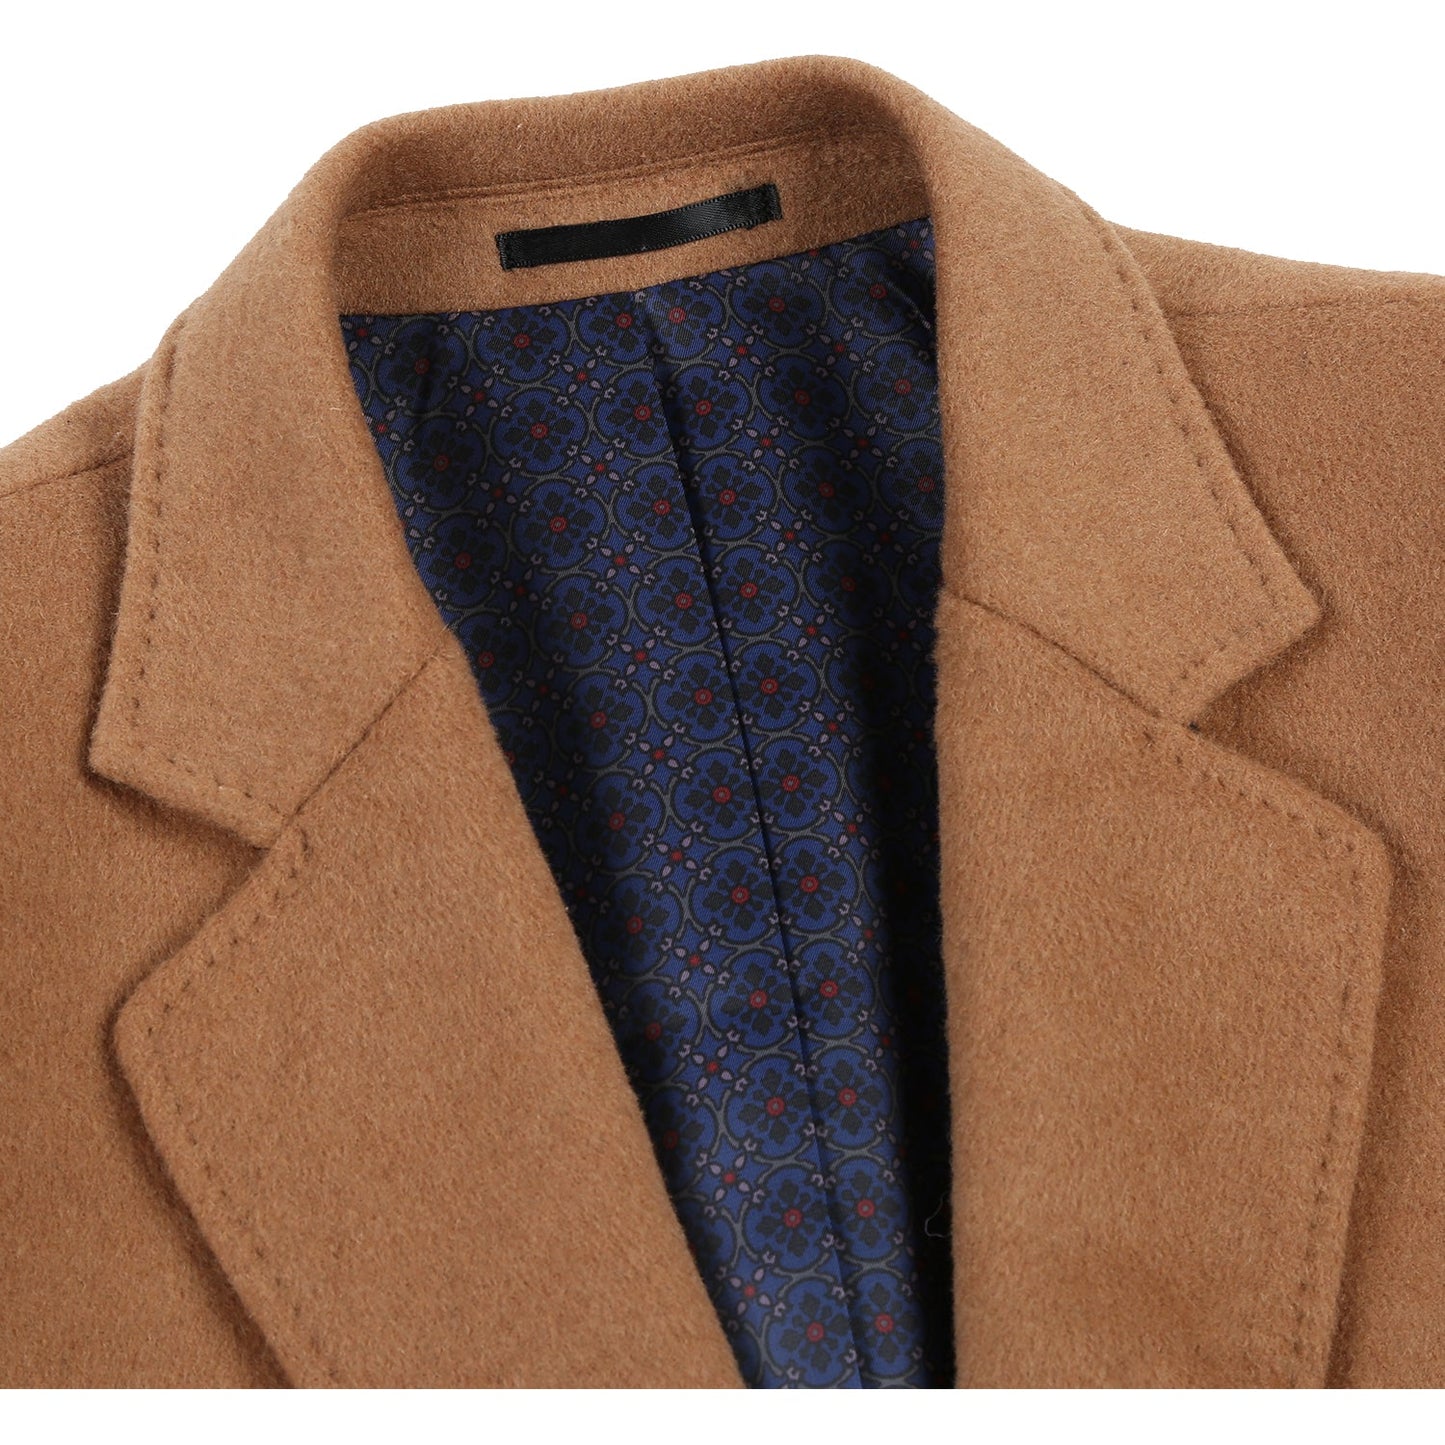 53-01-600 Wool Blend Notch Lapel Tan Top Coat